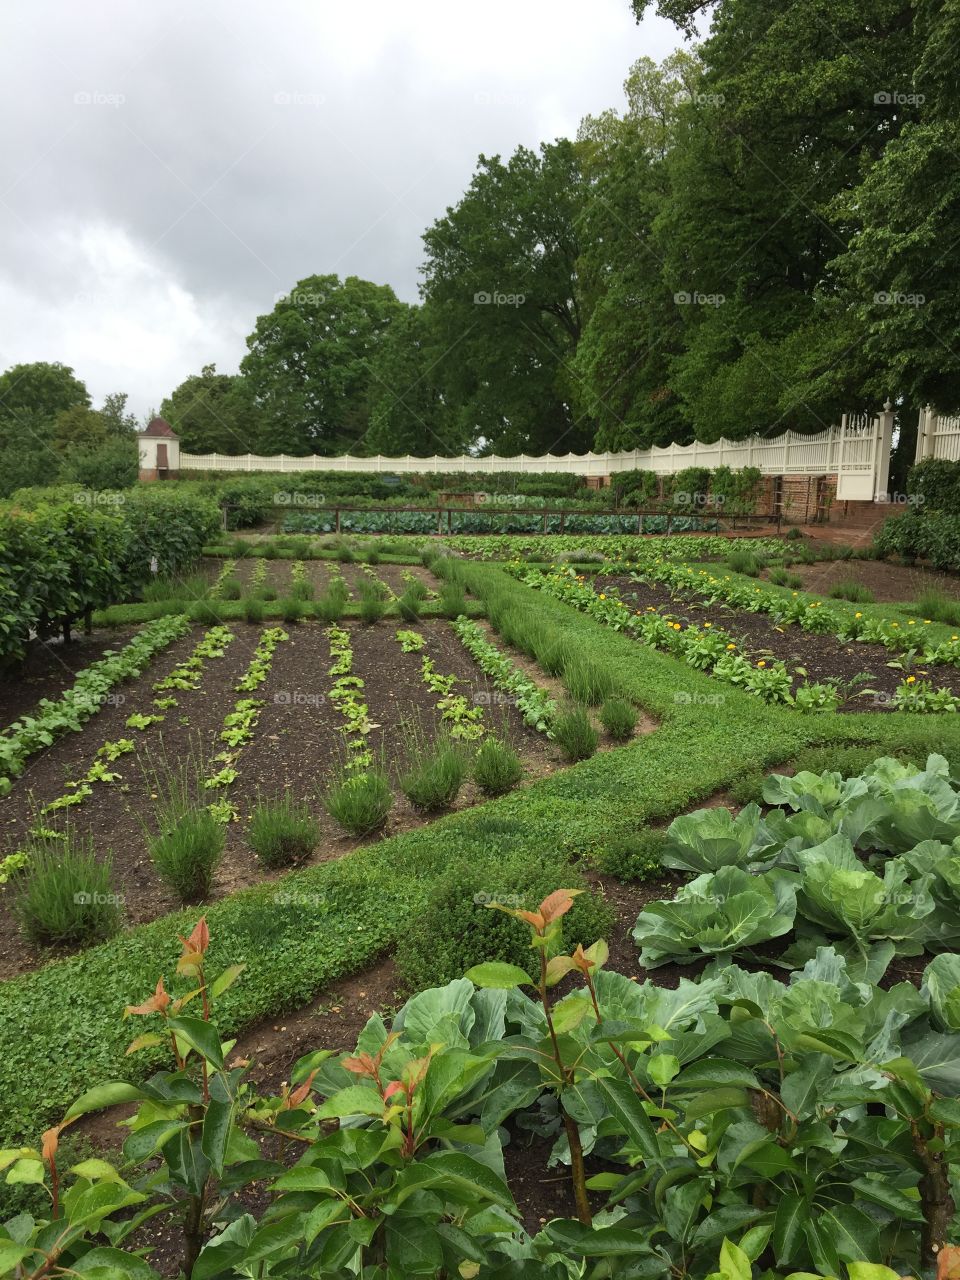 George Washington's one of many gardens. Mount Vernon. VA. 